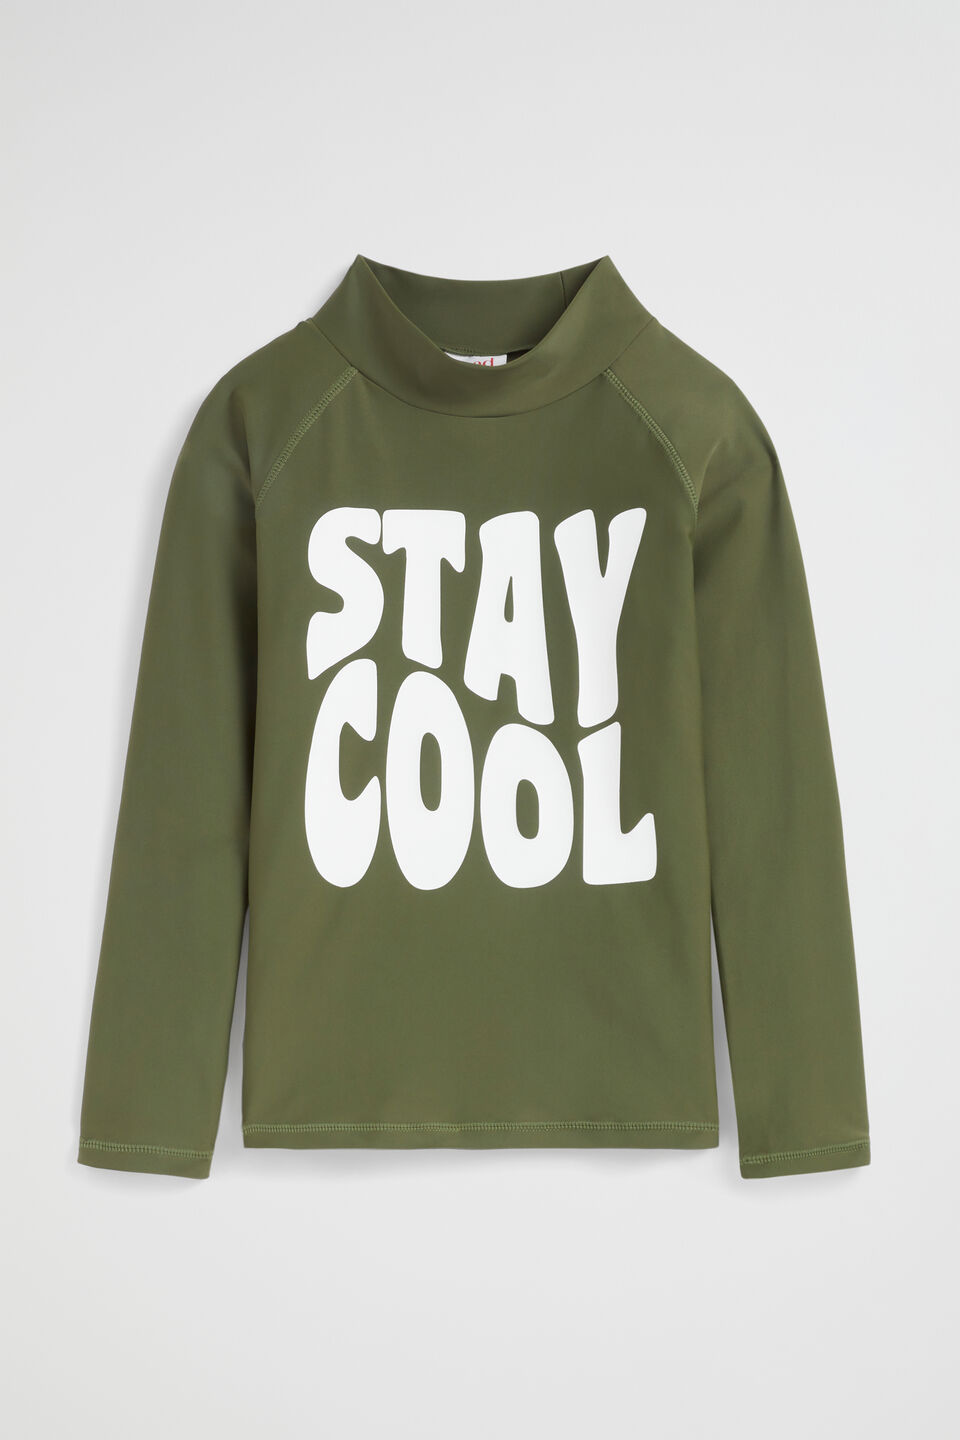 Stay Cool Rashvest  Crocodile Green